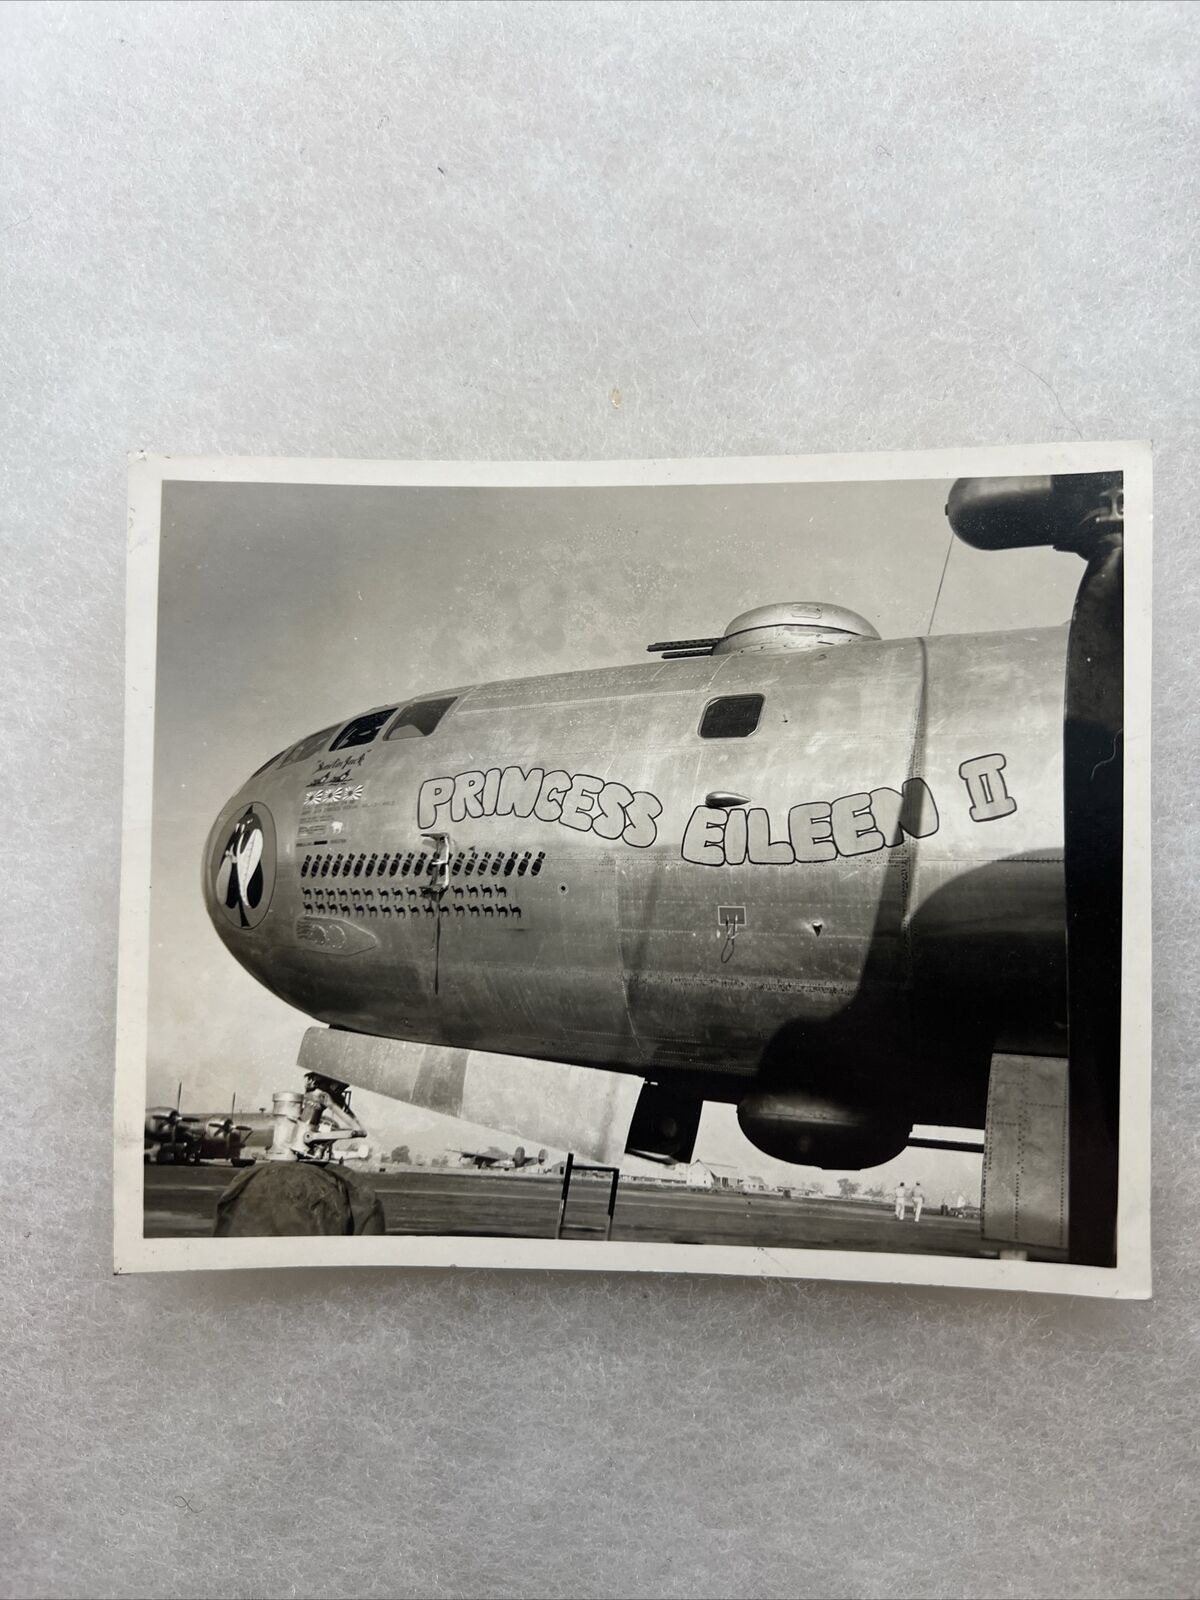 WW2 US Army Air Corps Nose Art Plane Photo “Princess Eileen II” 678th BS (V86